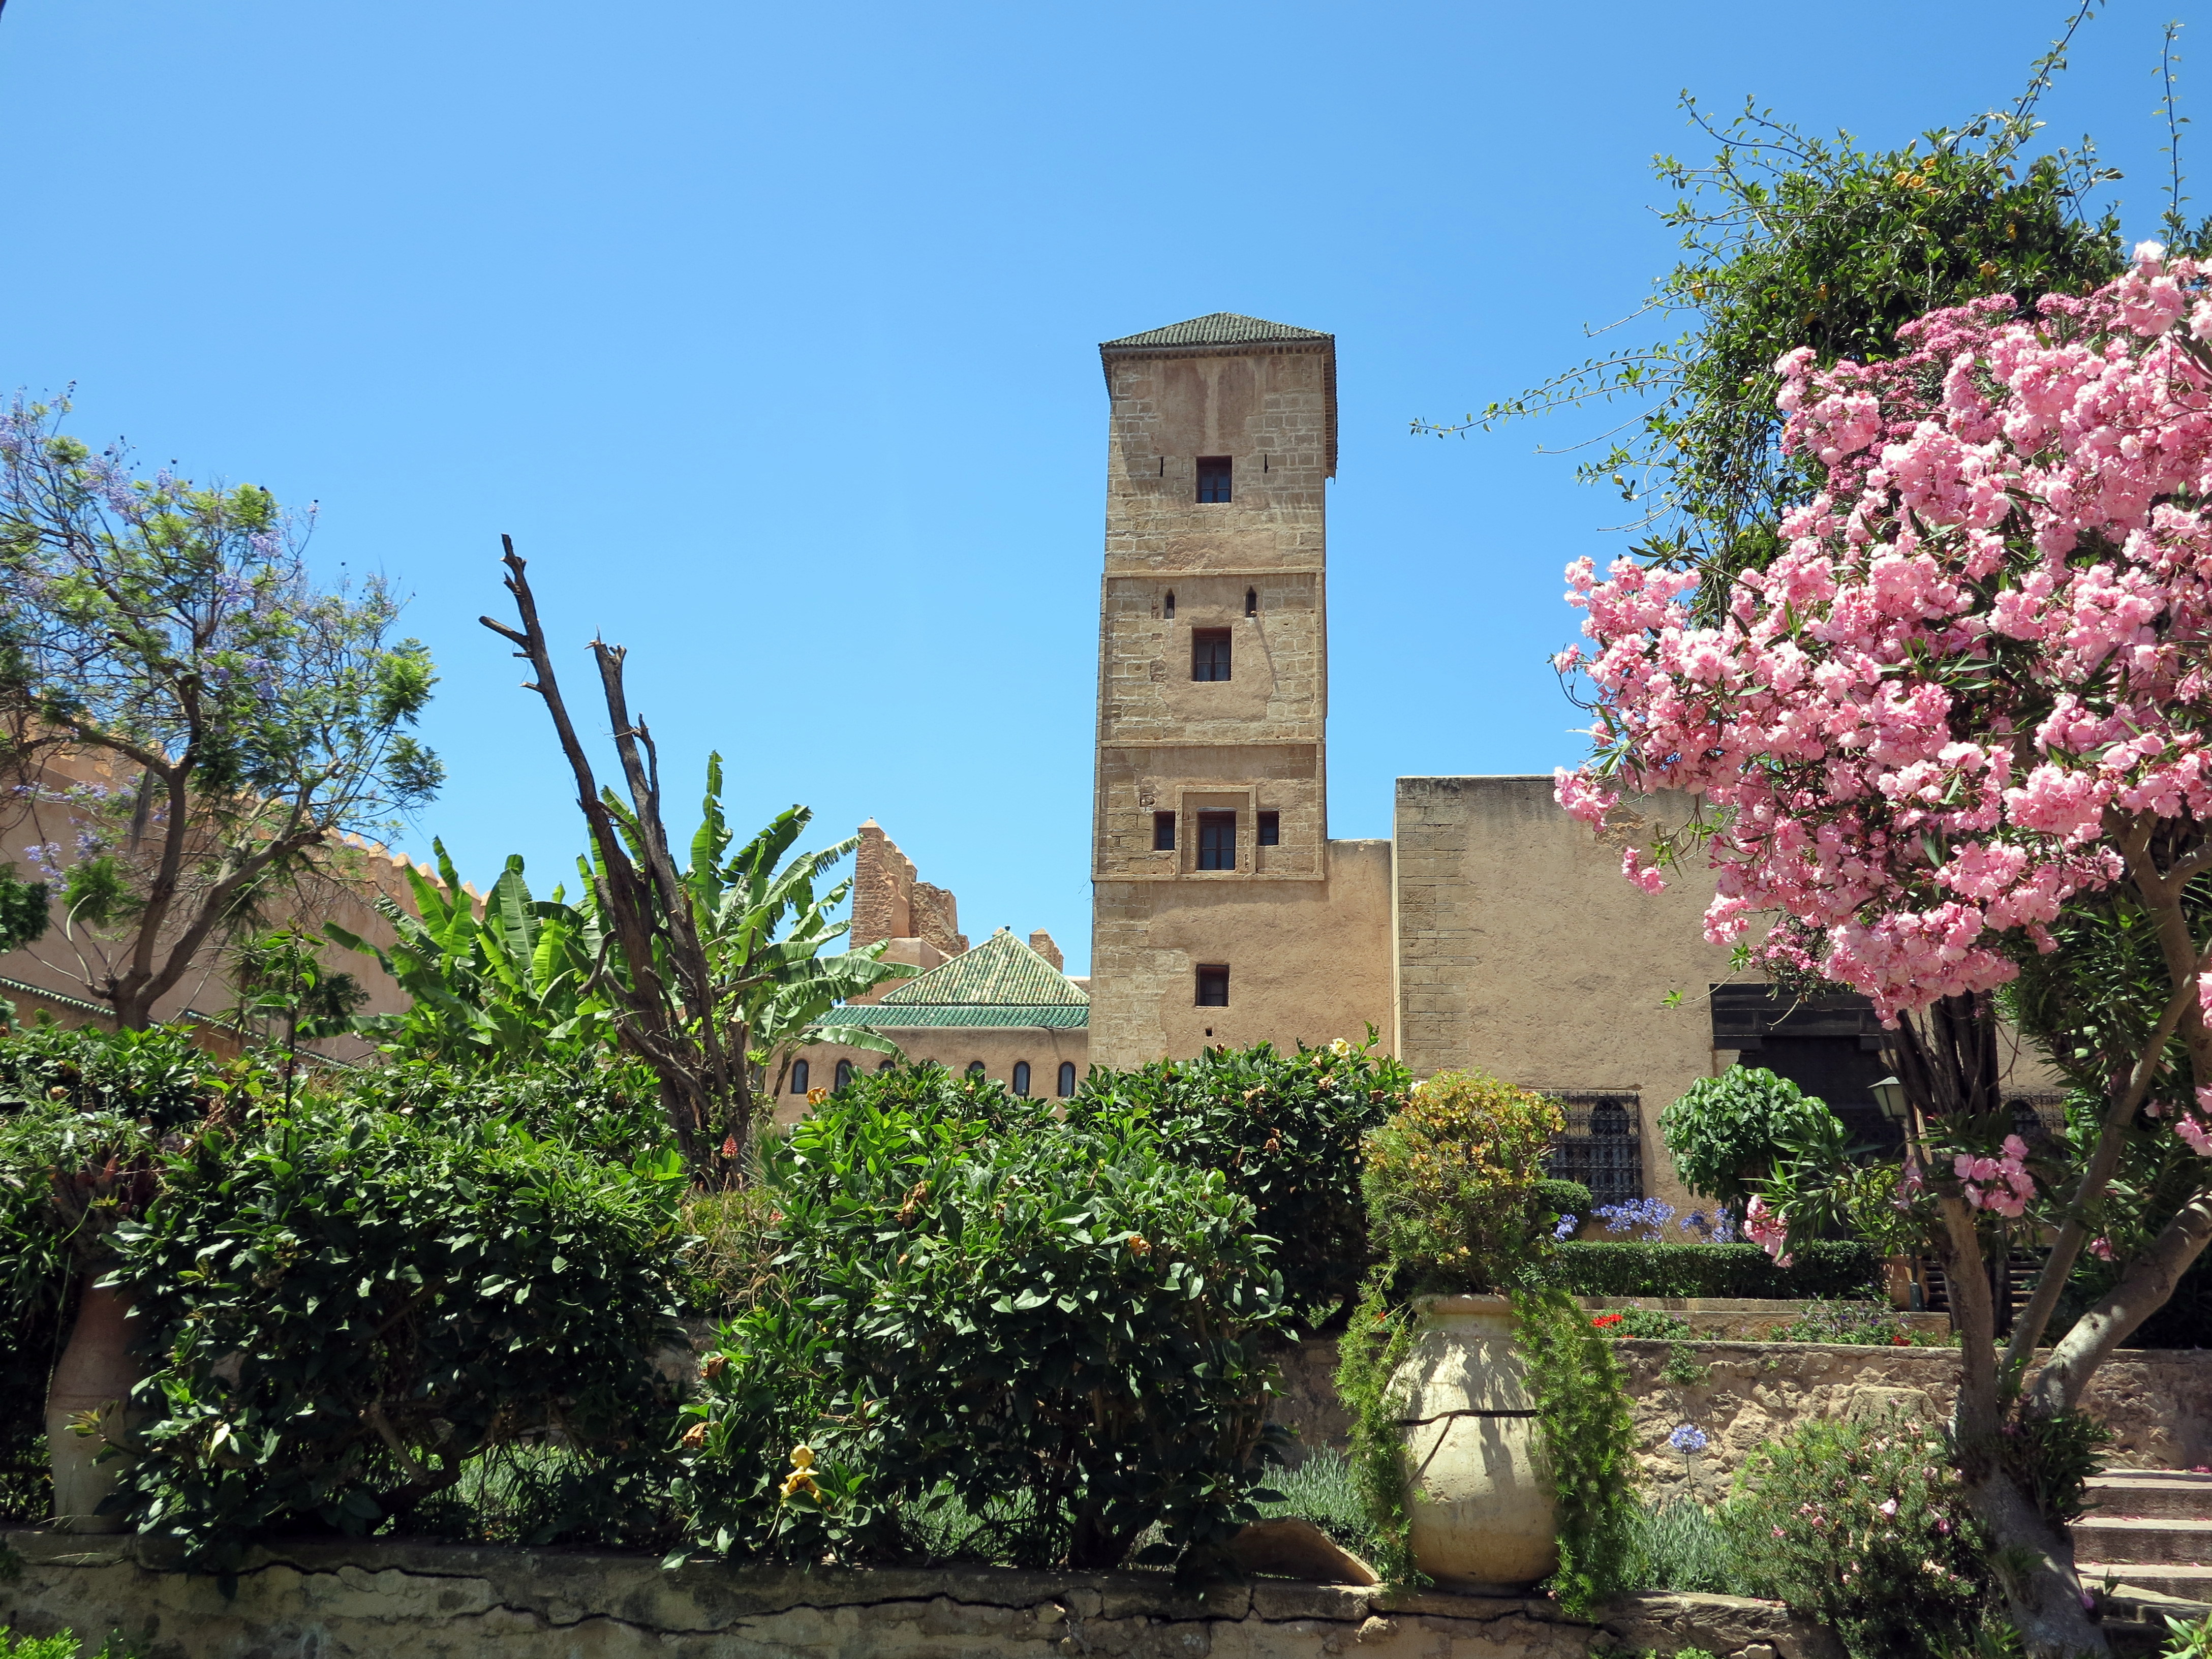 2014.6.3 IMG_4233 Garden in Rabat, Morocco 4352x3264-001